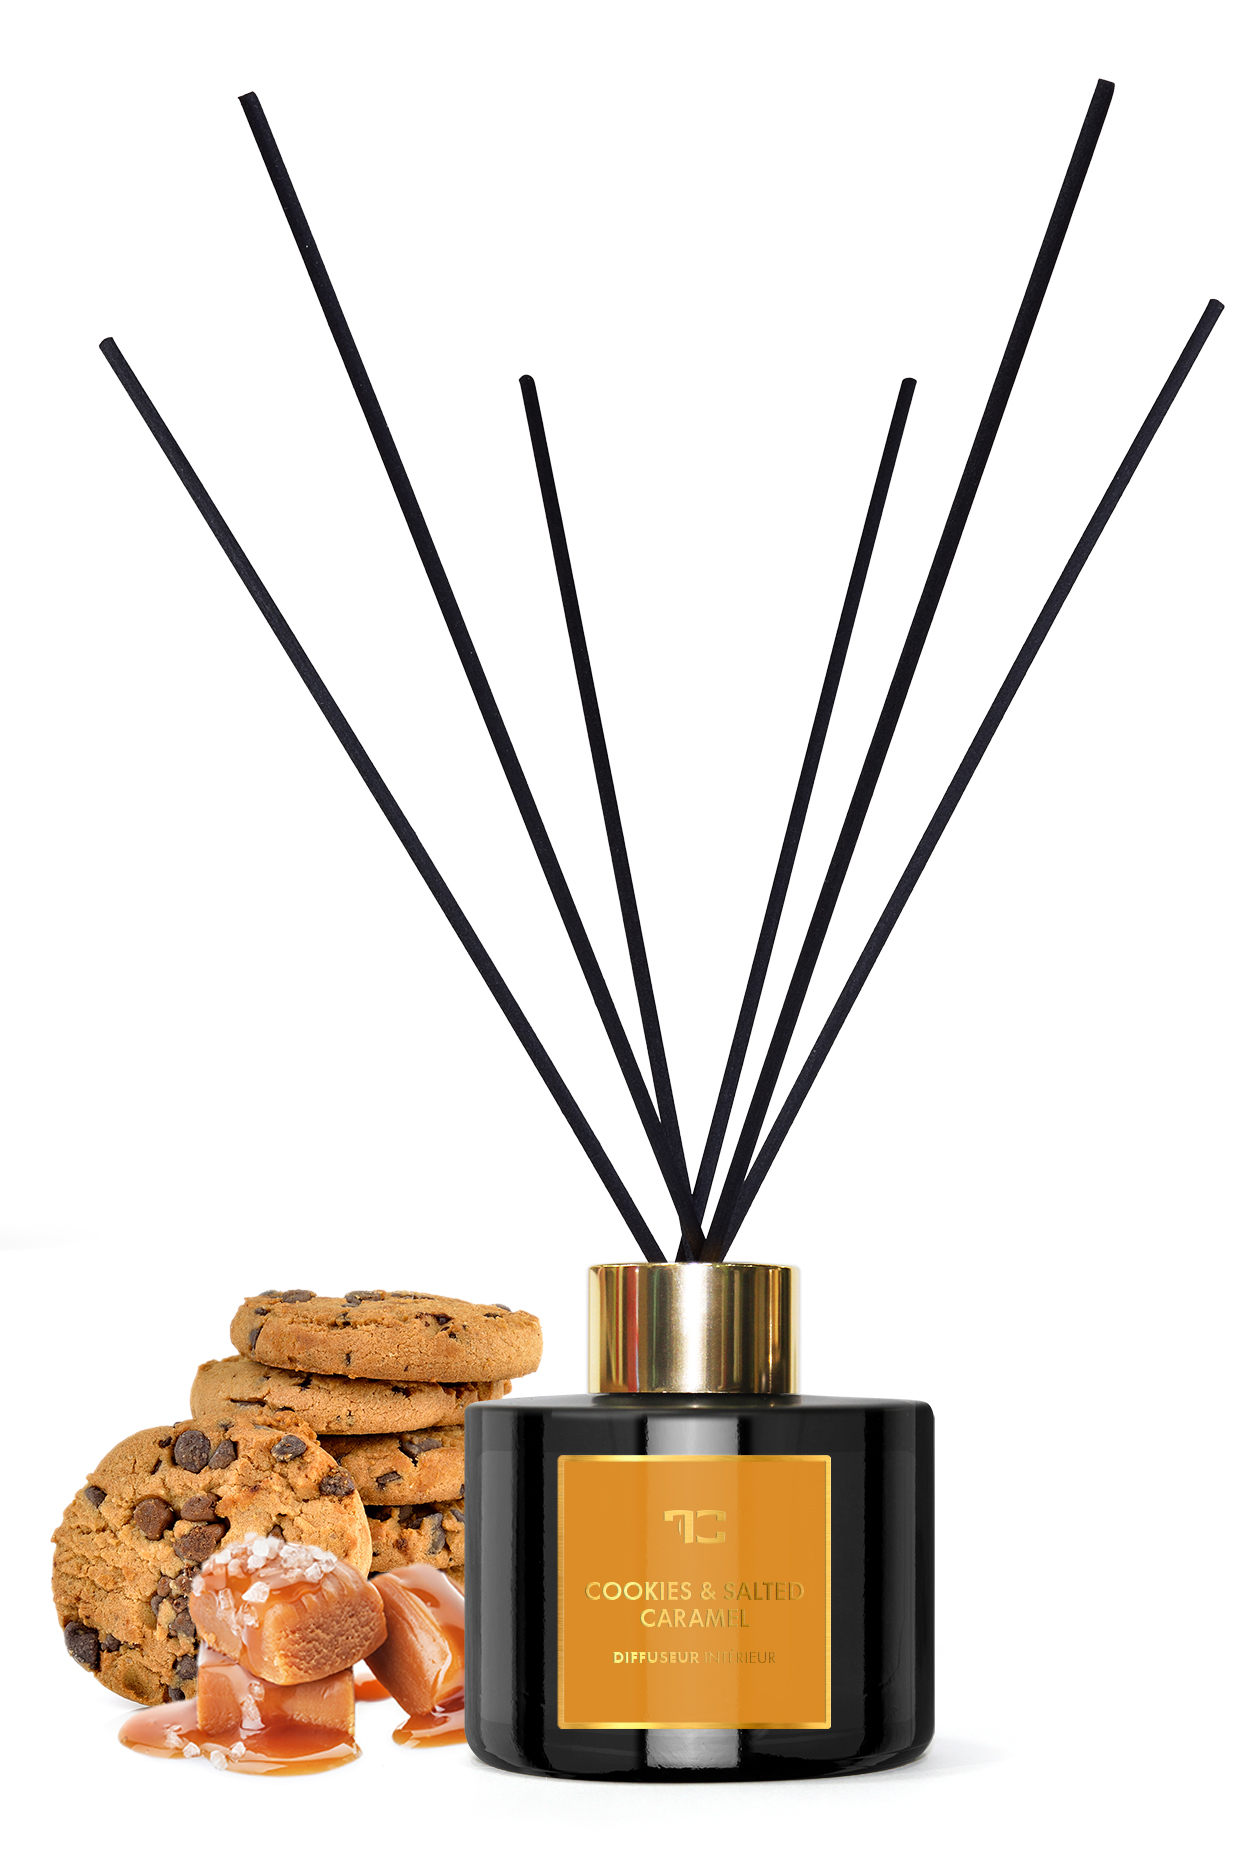 Interiérový bytový parfém 200 ml, COOKIES & SALTED CARAMEL, DIFFUSEUR INTÉRIEUR